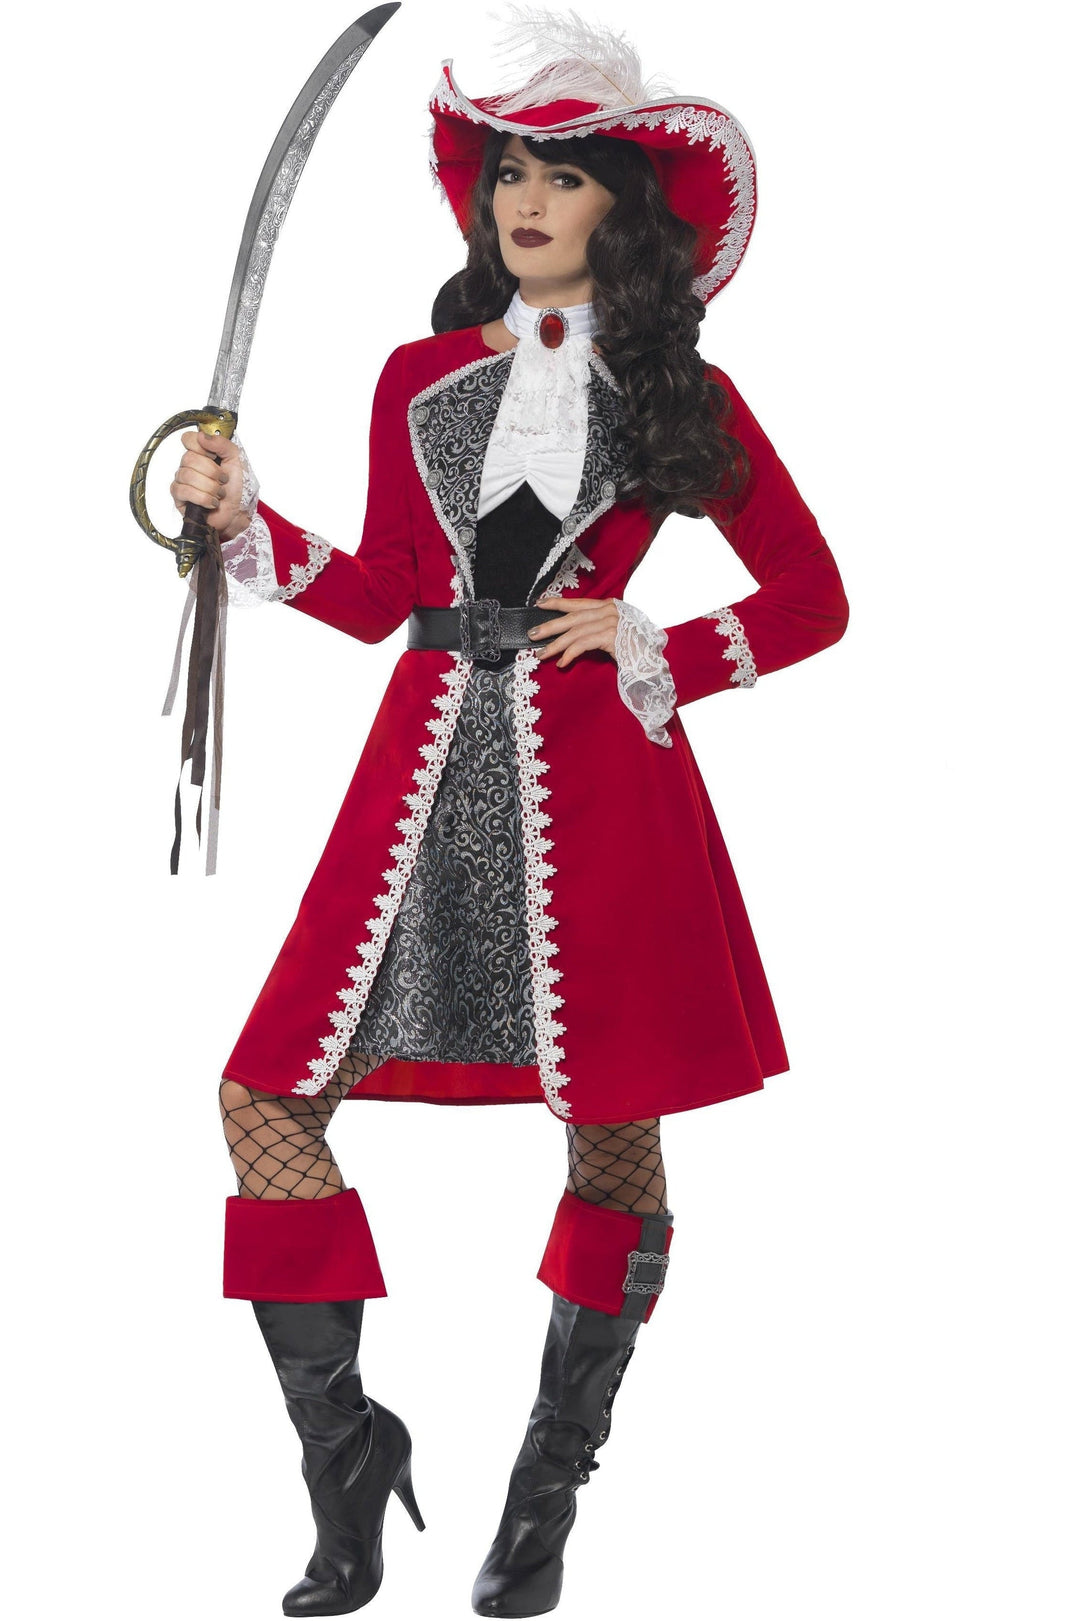 Deluxe Authentic Lady Captain Costume